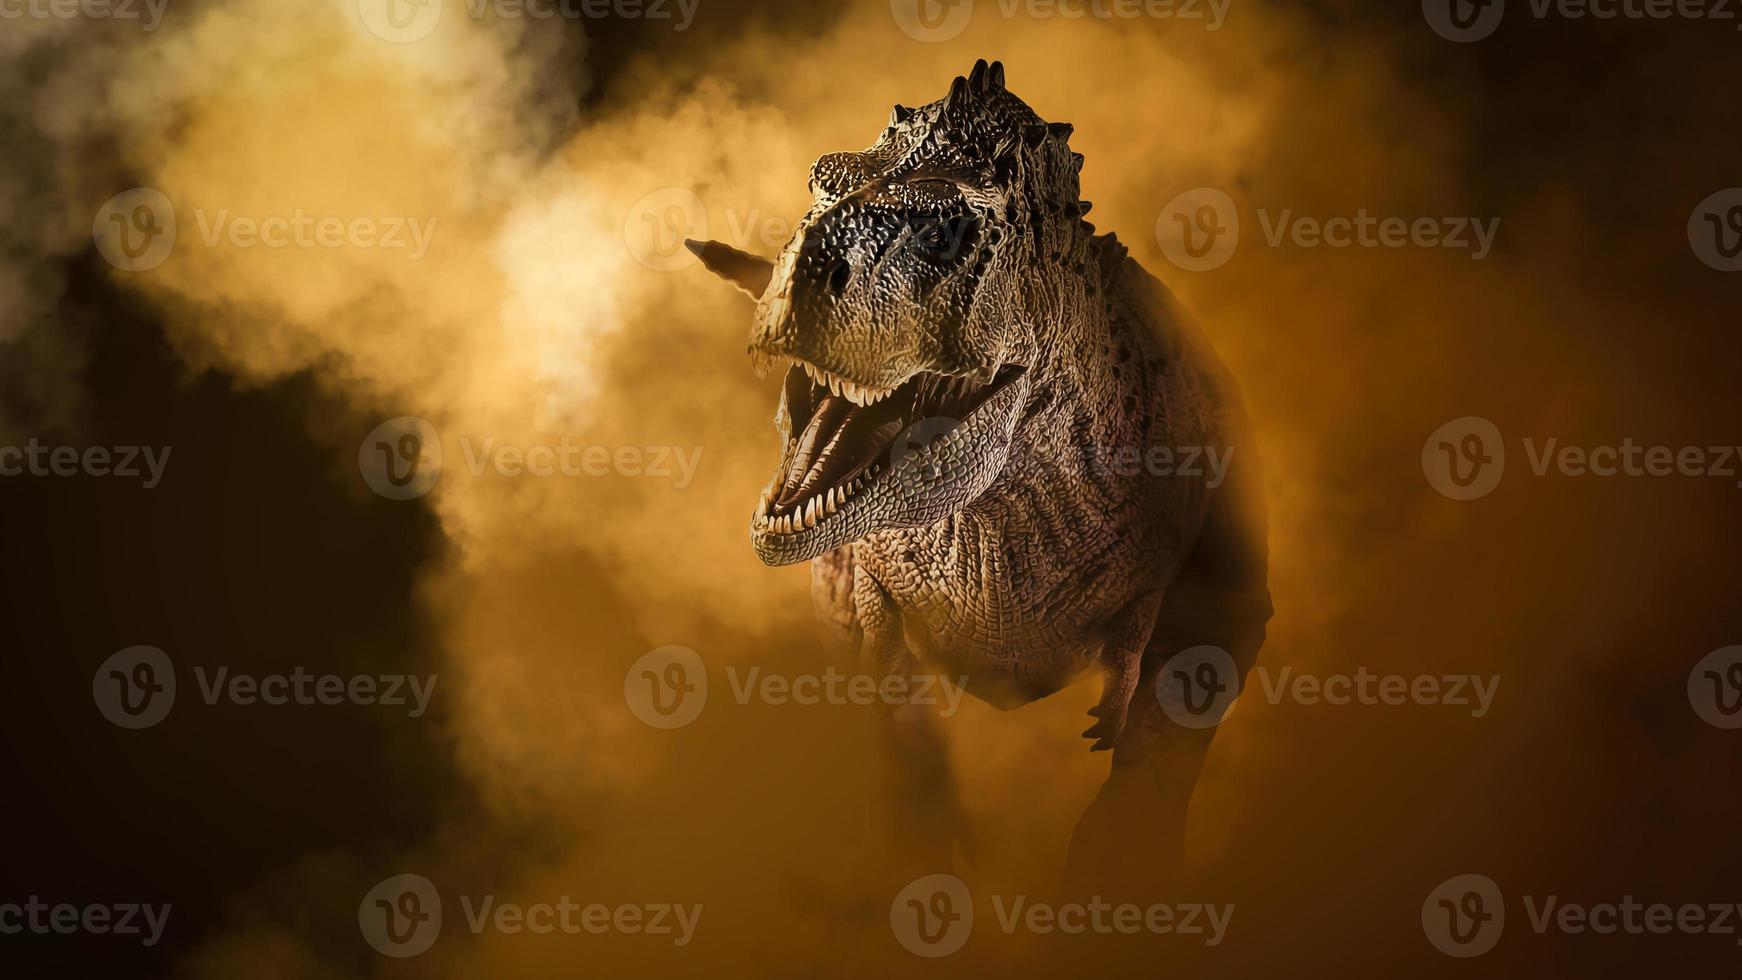 ekrixinatosaurus epitaffio dinosauro su sfondo fumo foto